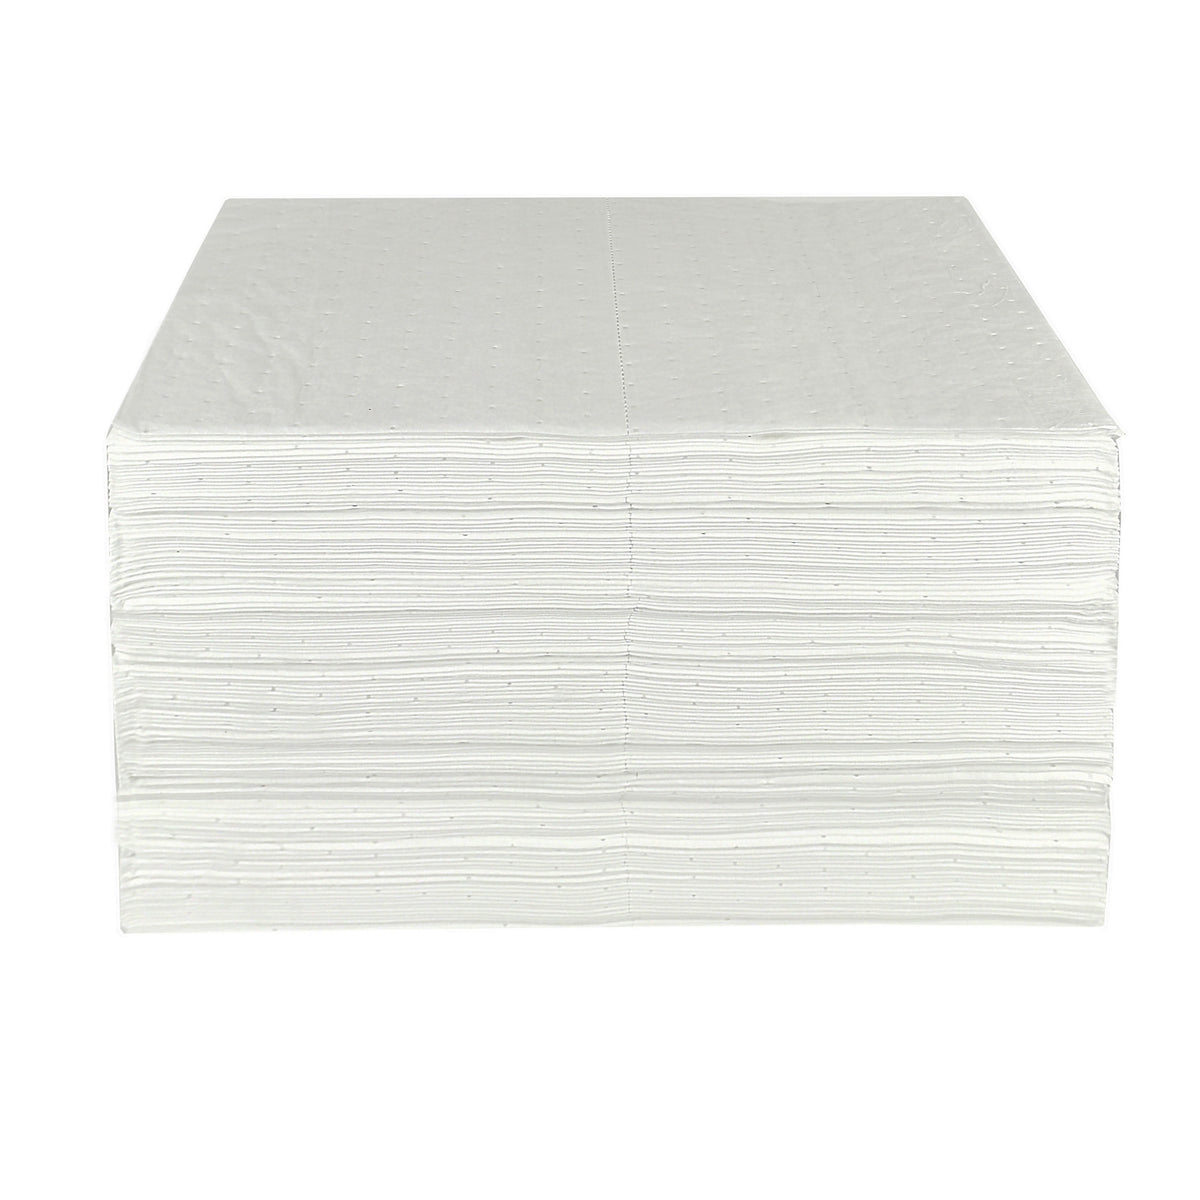 Aain® LT011 Spill Absorbent Pads/Mats, 20 Length x 15 Width, White –  Autospecialtools